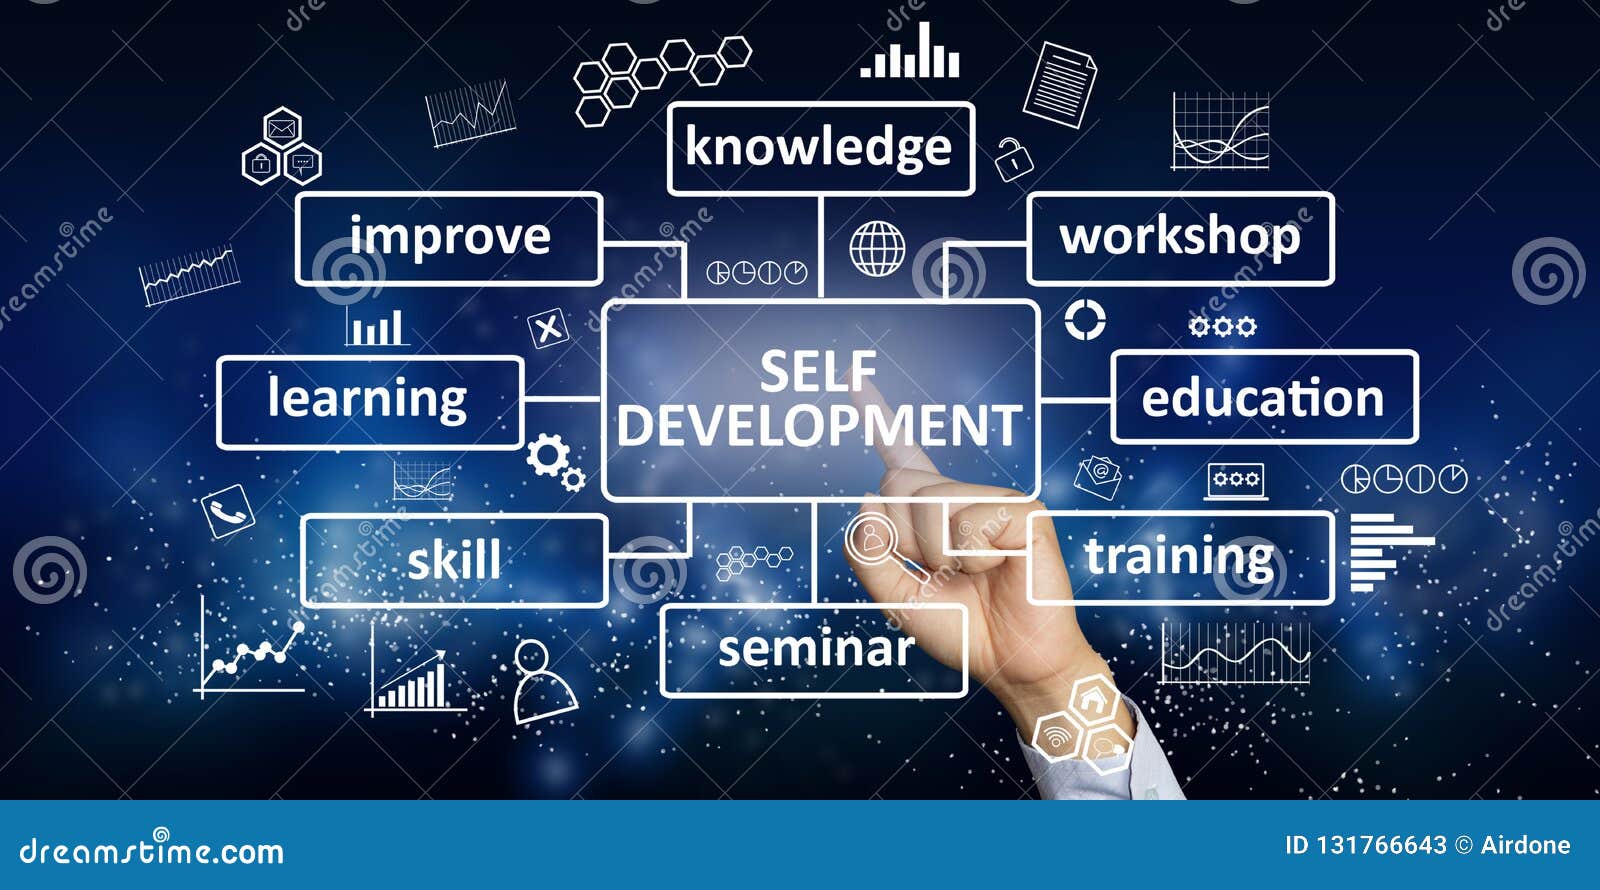 self development, pesonal new business skills motivational inspirational quotes